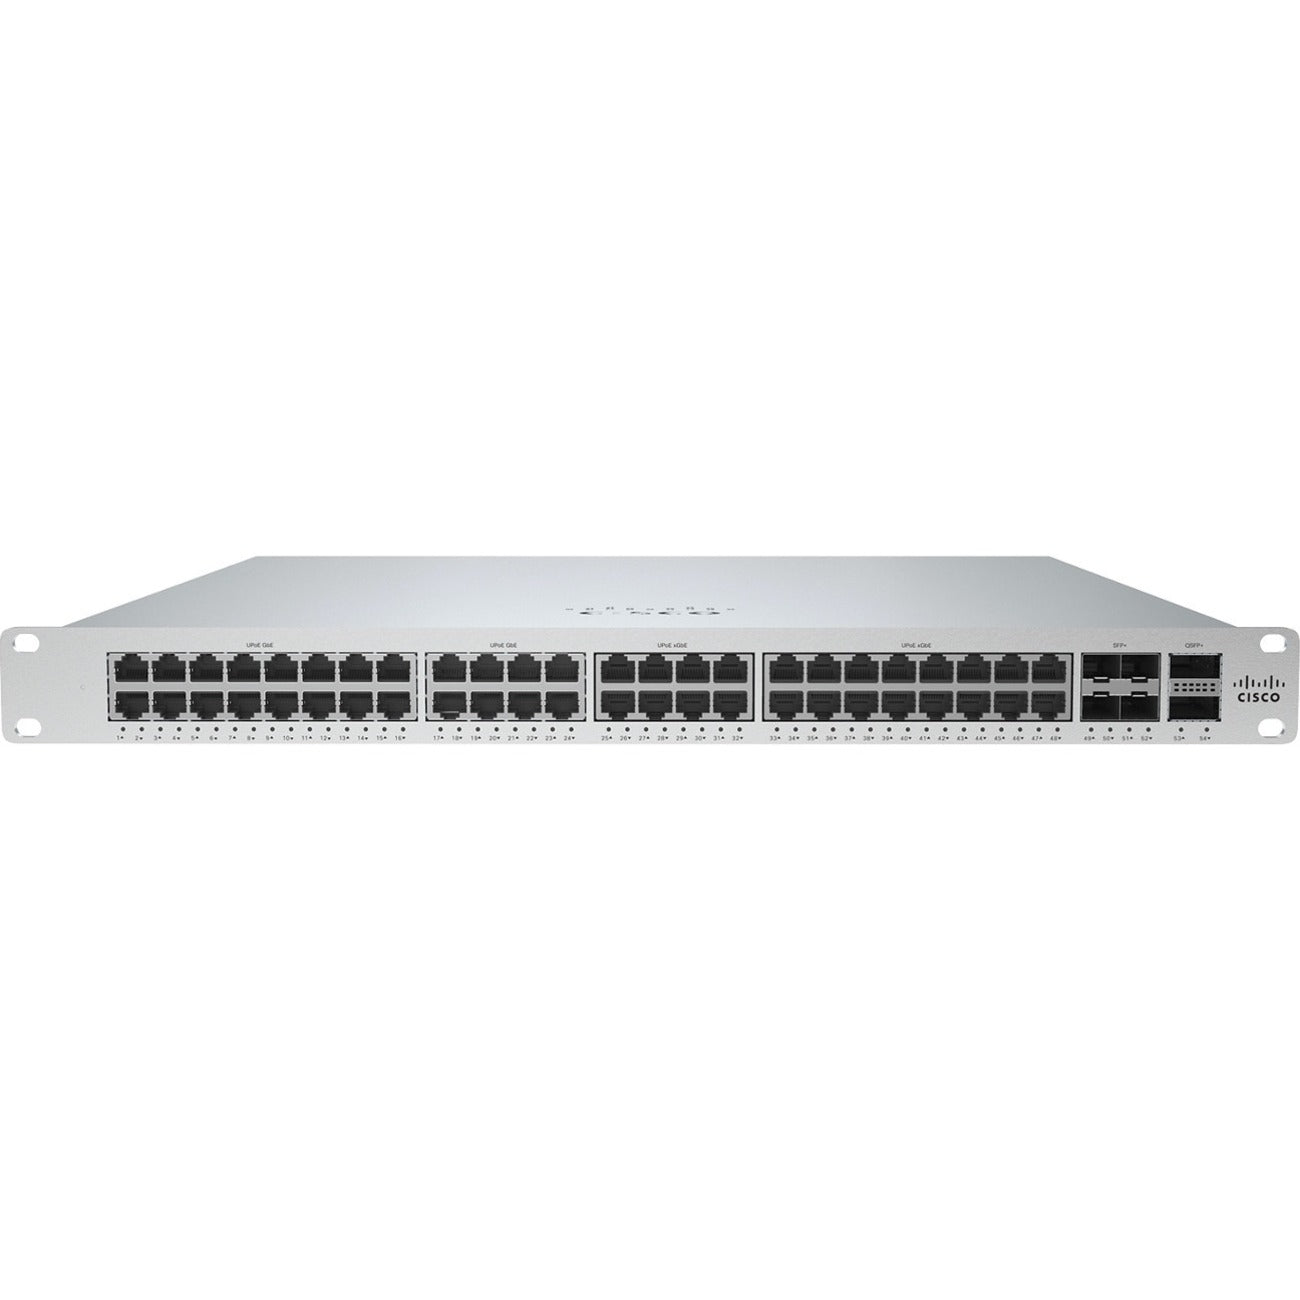 MS355-48X2 | Cisco Meraki Cloud Managed - Stackable Access Switch